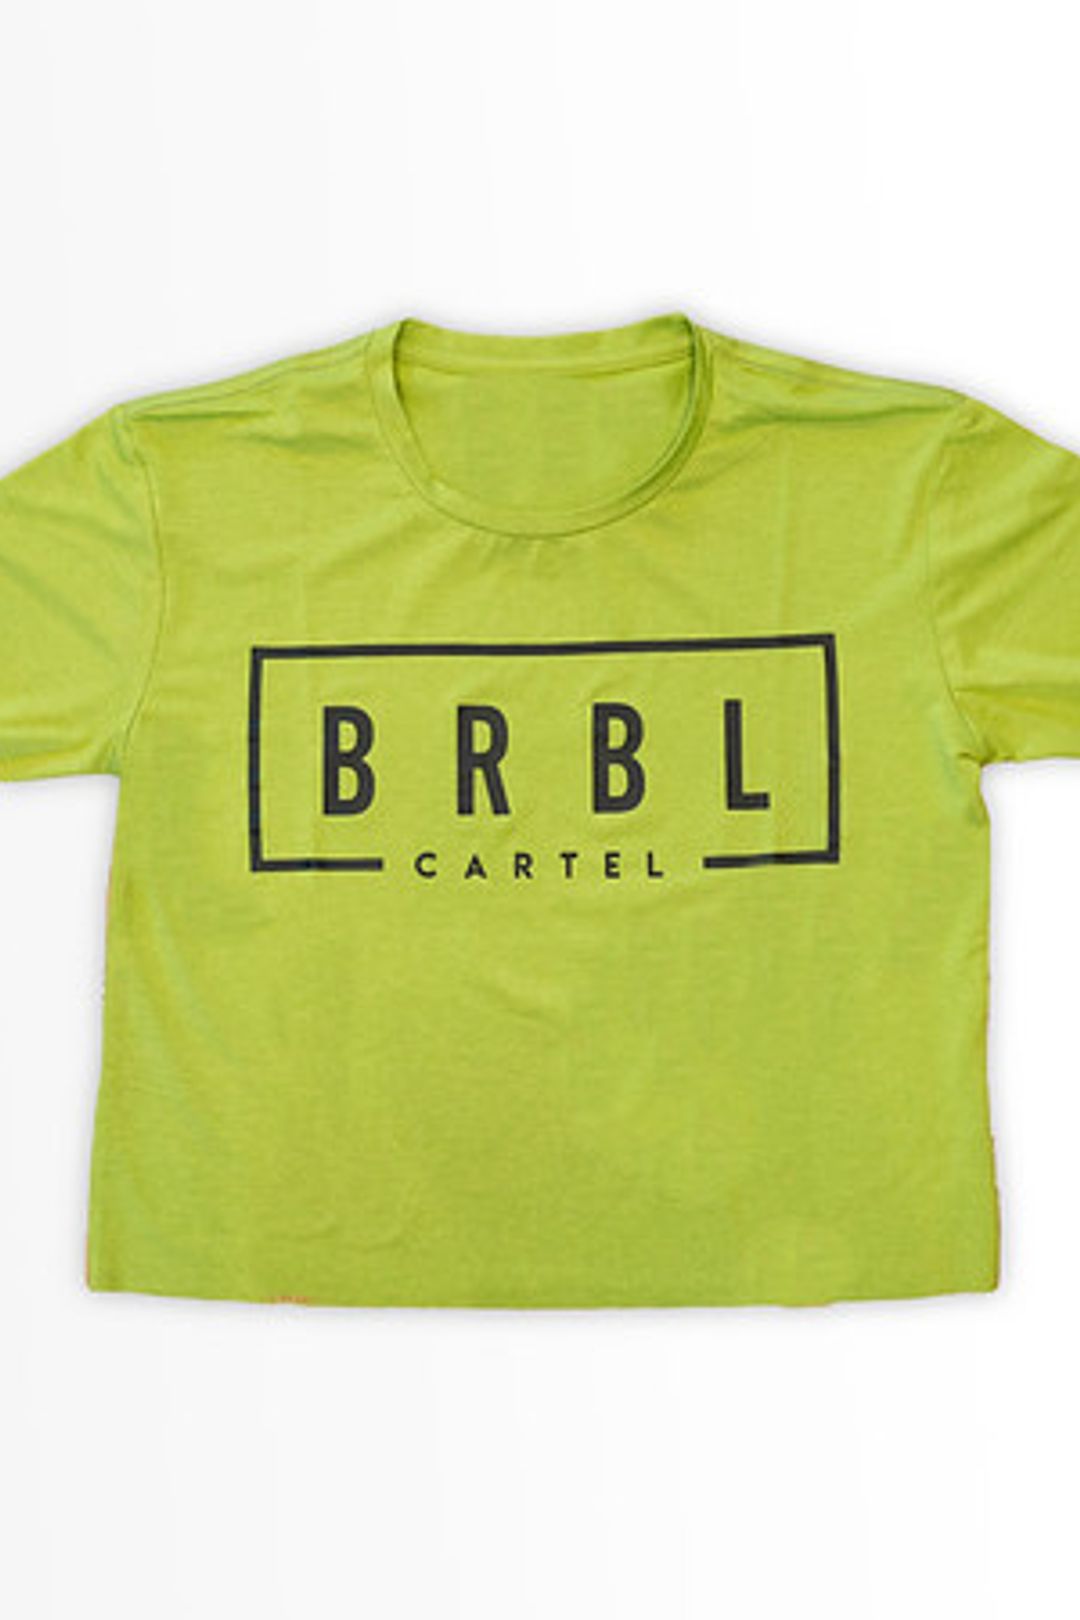 Barbell Cartel Crop T-Shirts